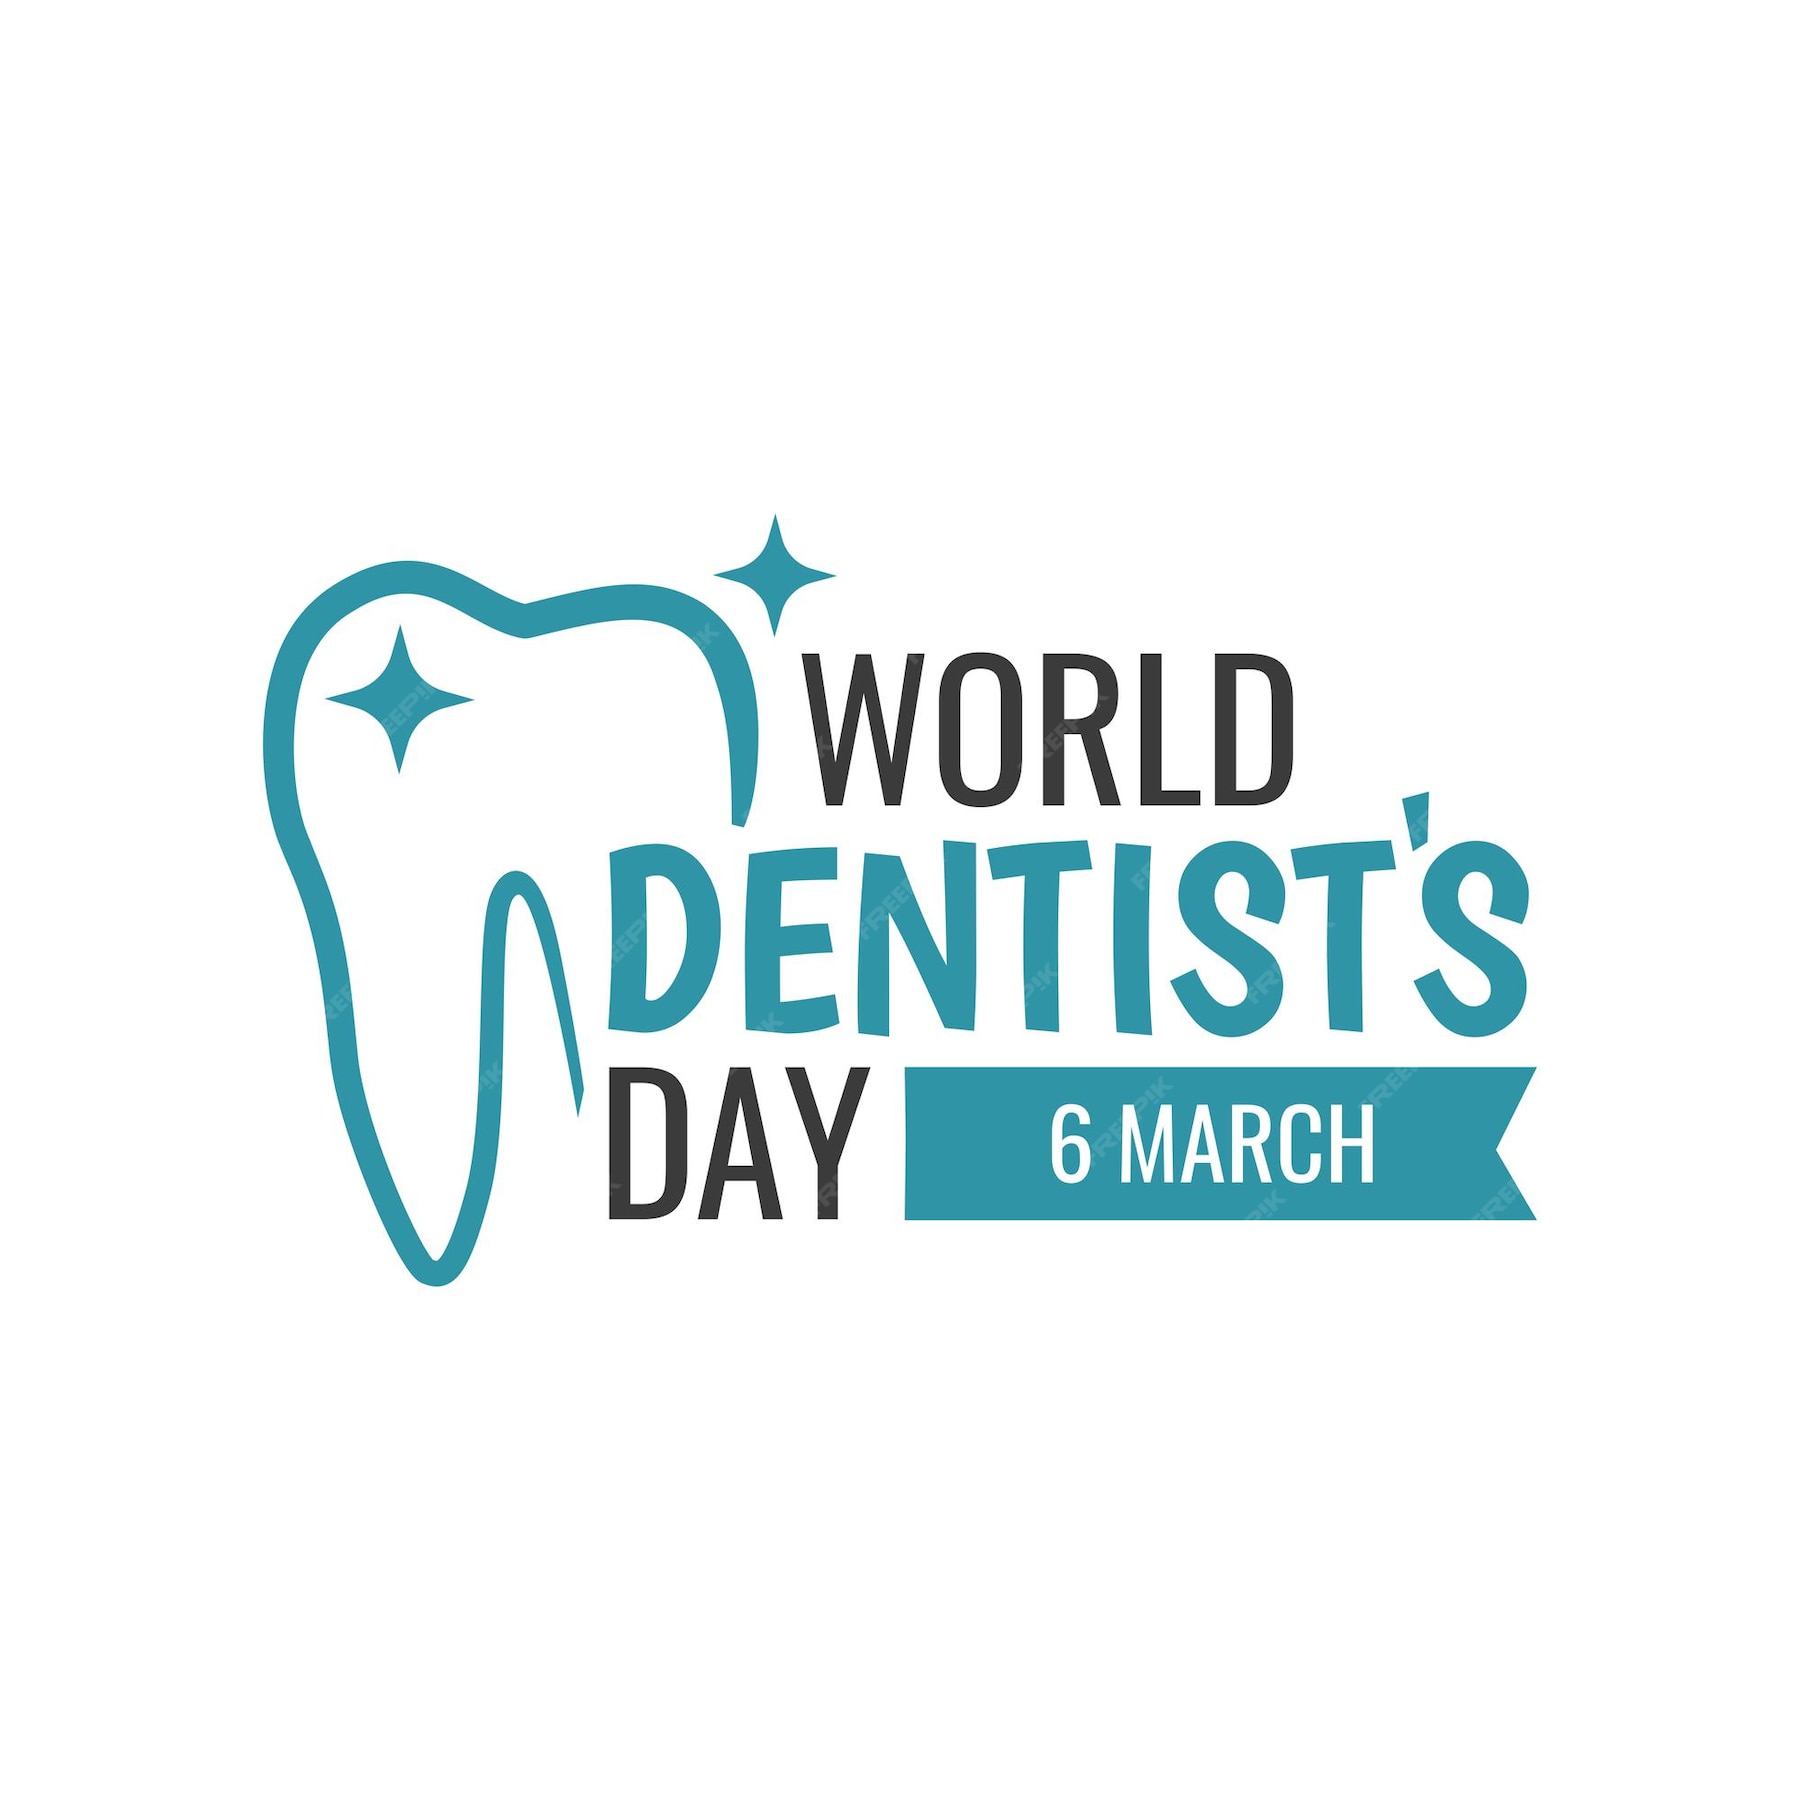 Premium Vector Illustration of world dentist day